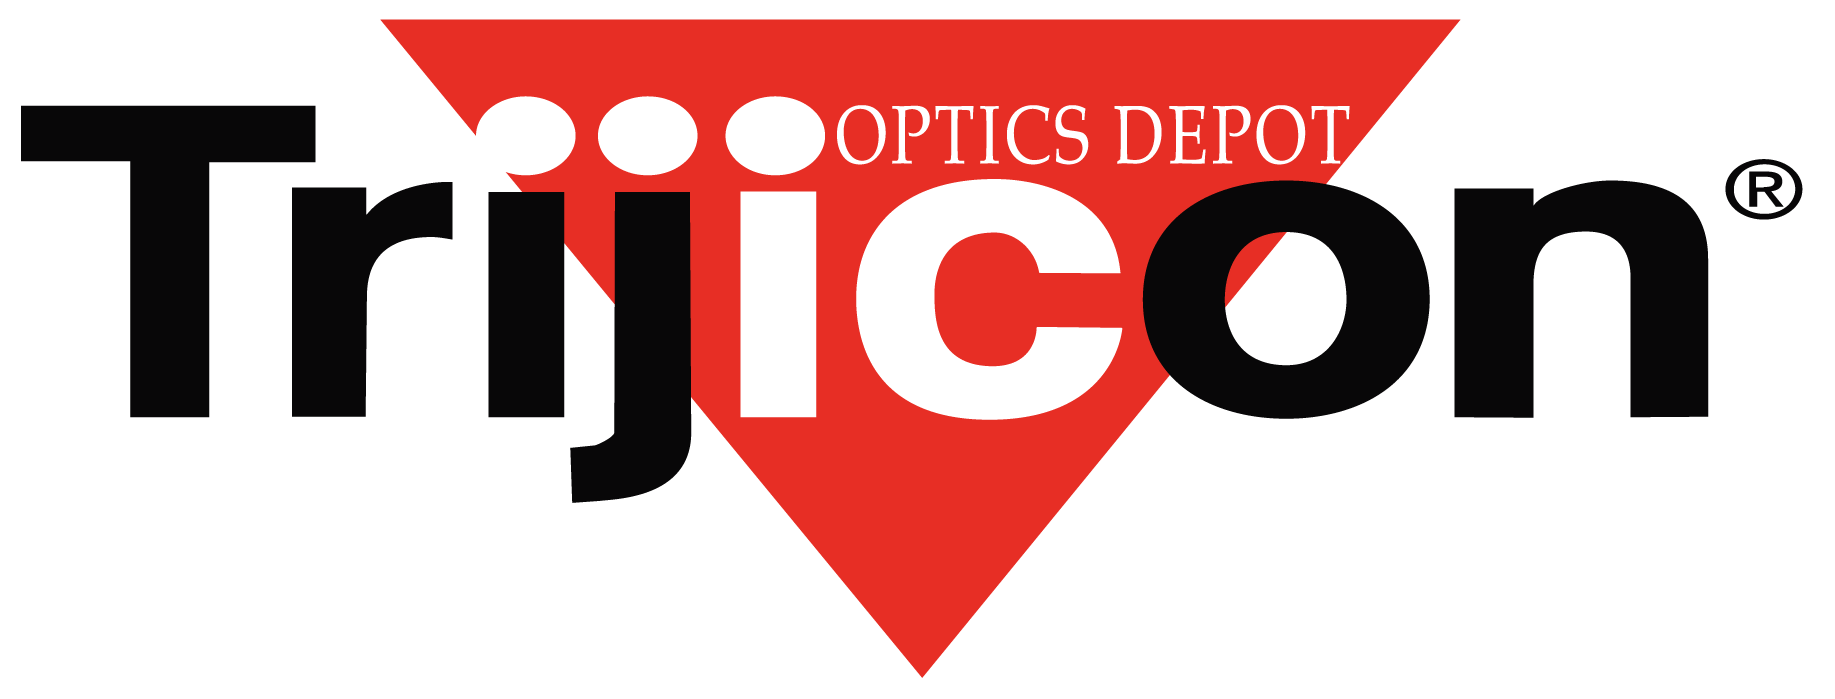 Trijicon Optics Depot